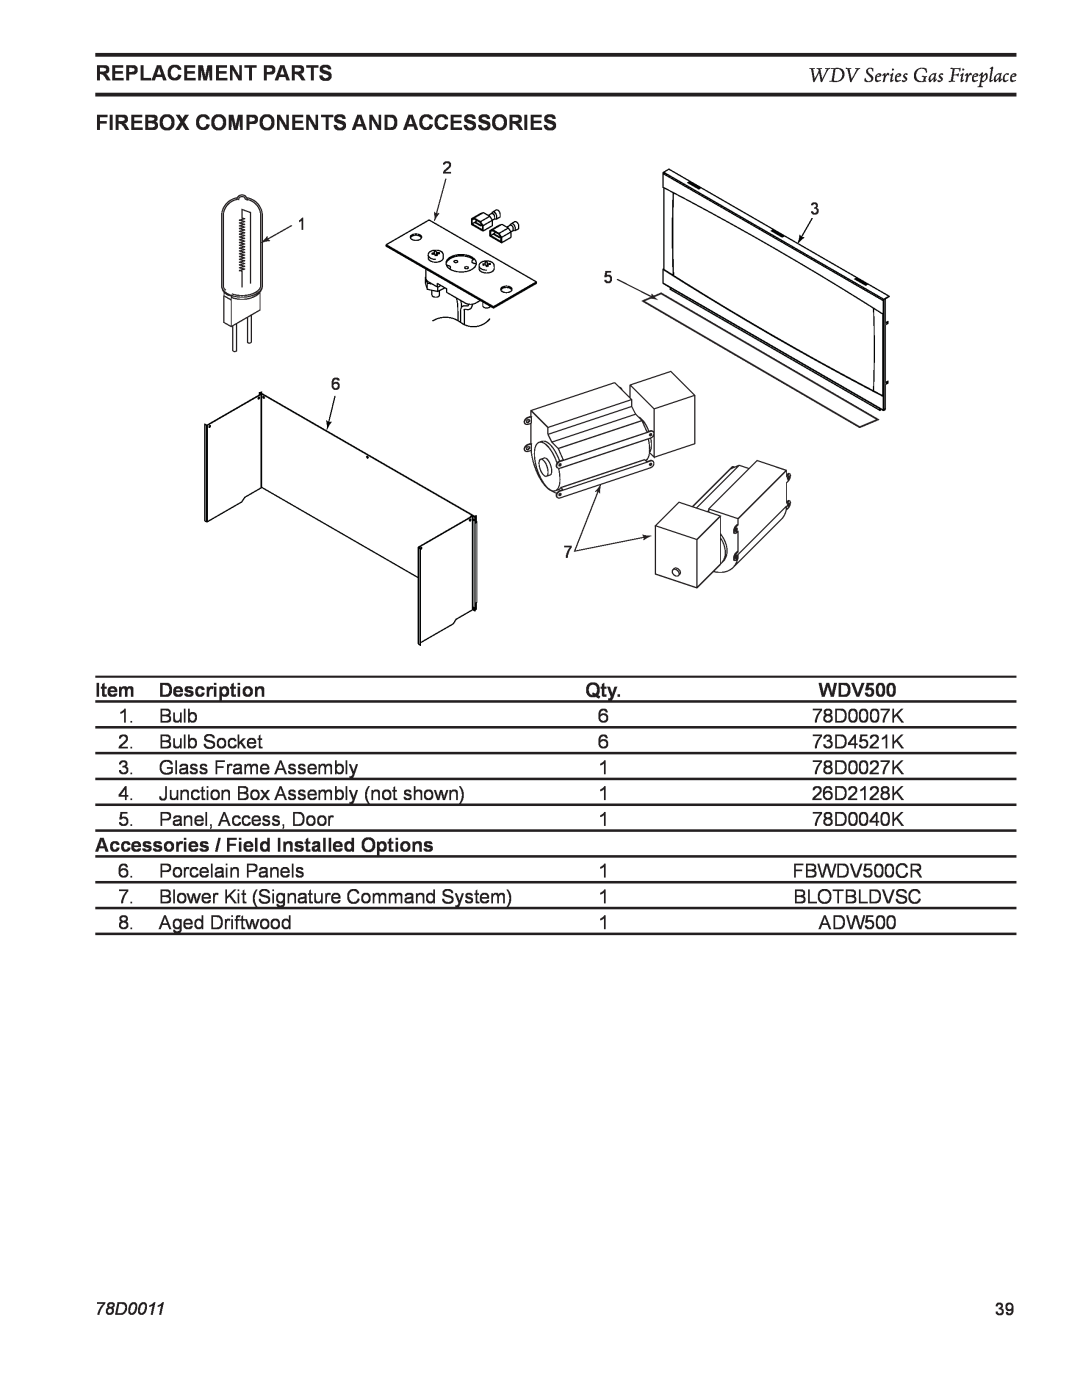 Monessen Hearth WDV500 manual Replacement Parts, firebox components and accessories, Description 